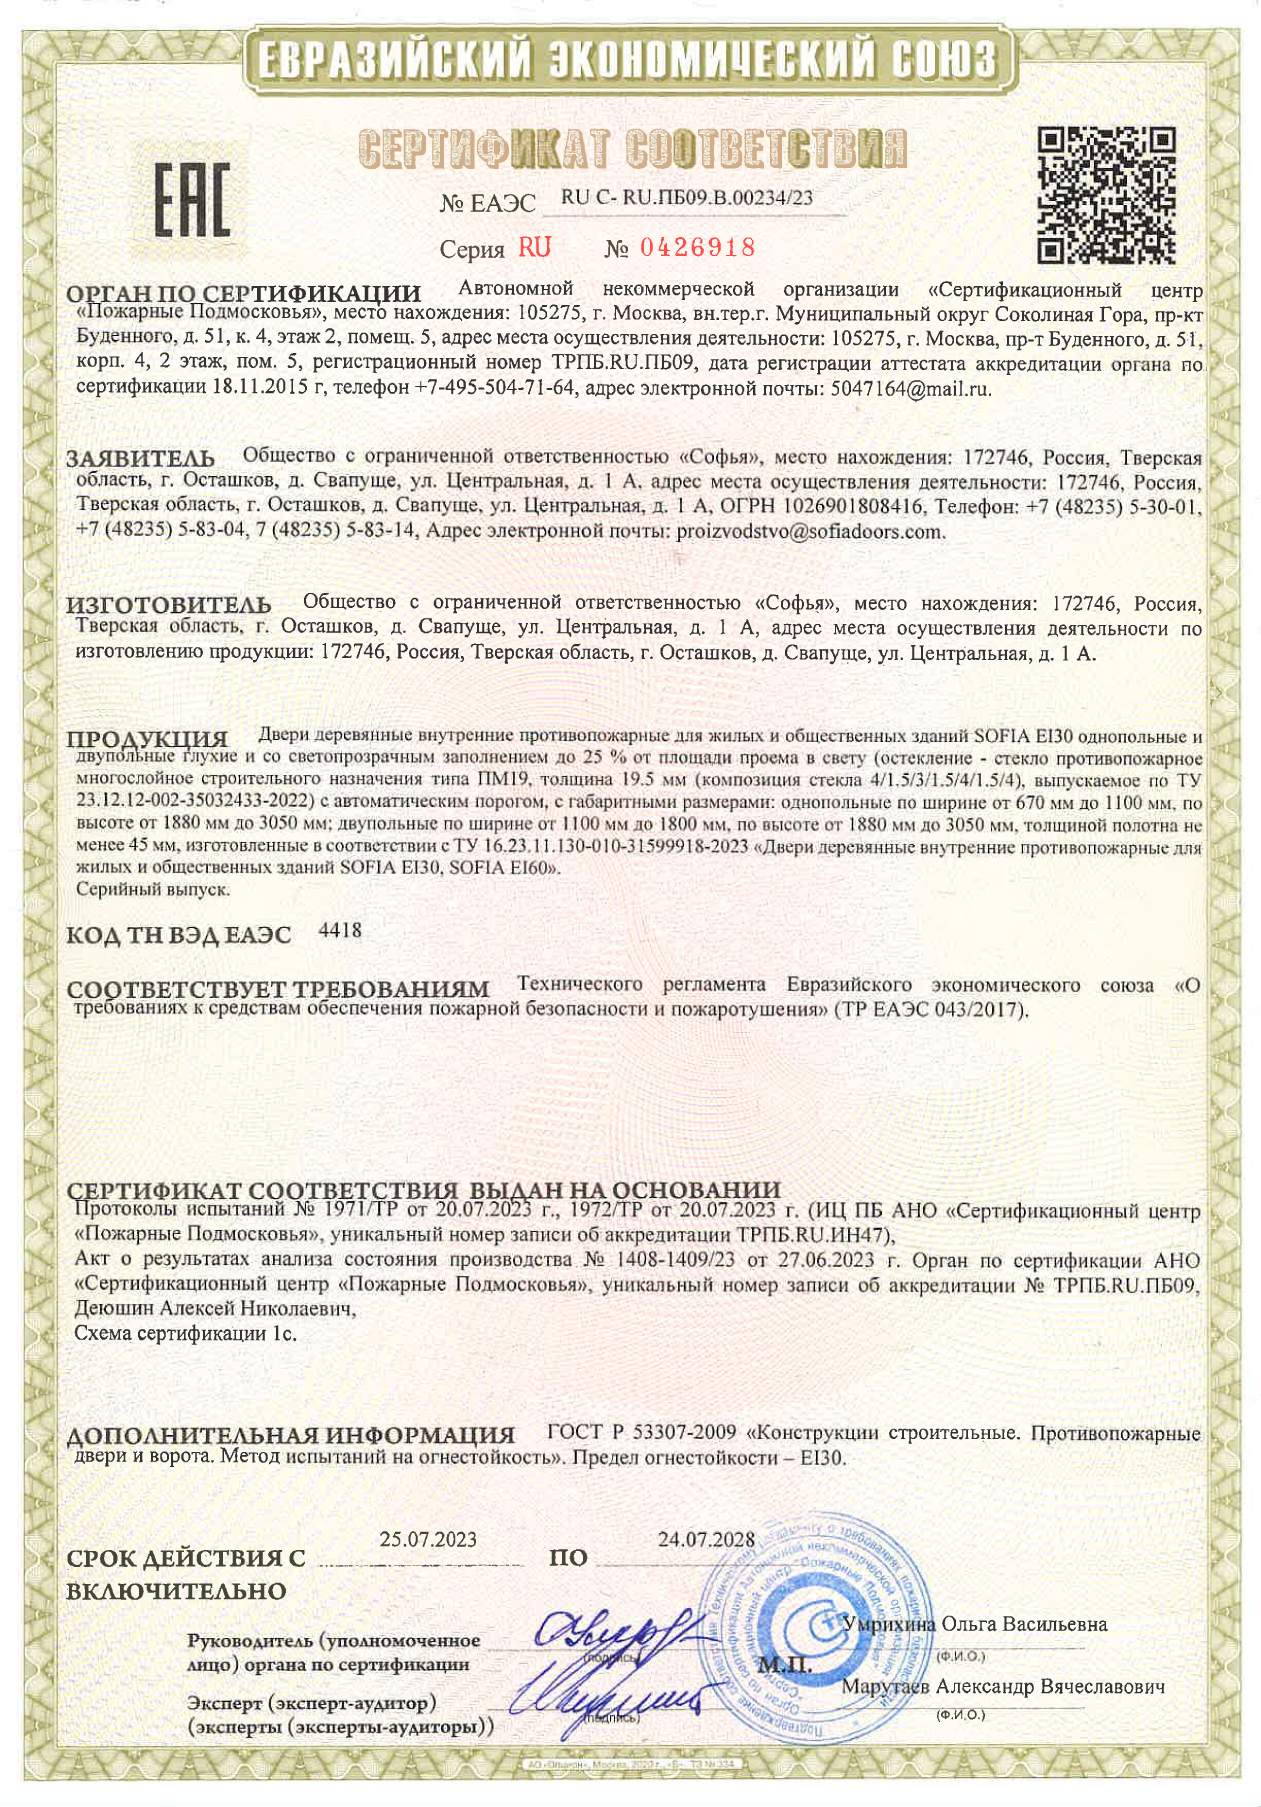 sertifikat-sootvetstviya-na-dveri-sofia-ei30-large